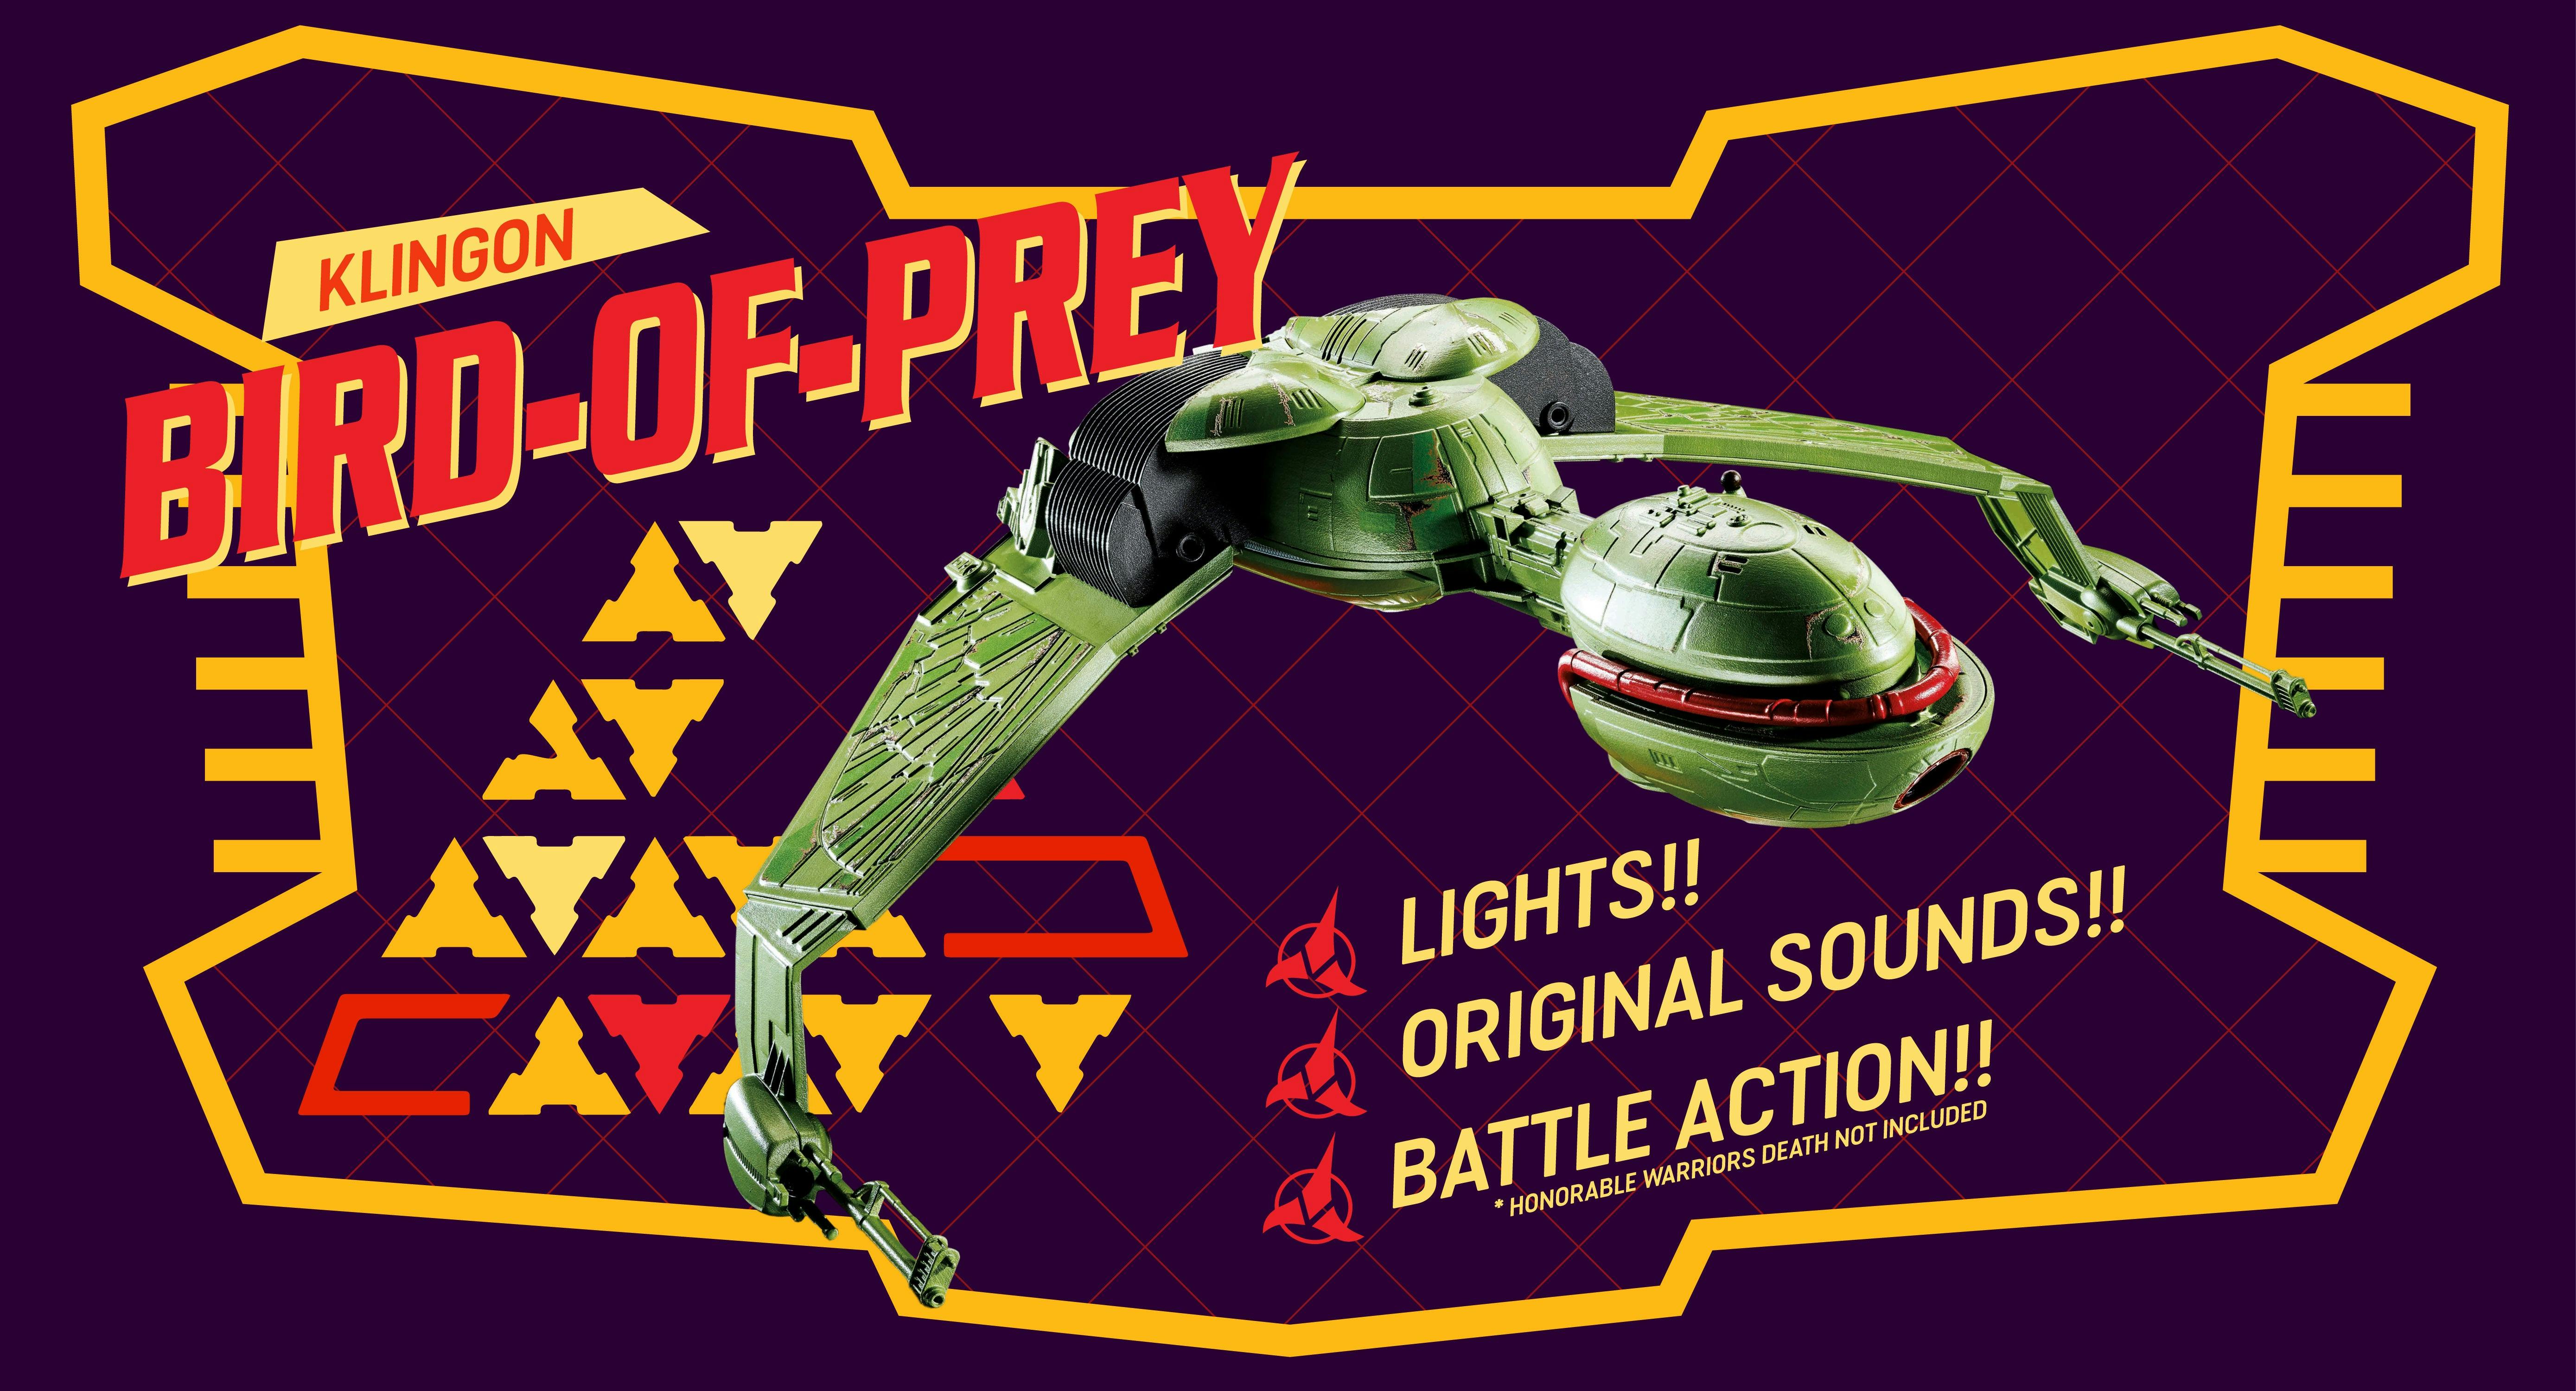 Illustrated banner featuring Playmobil Klingon Bird-of-Prey playset